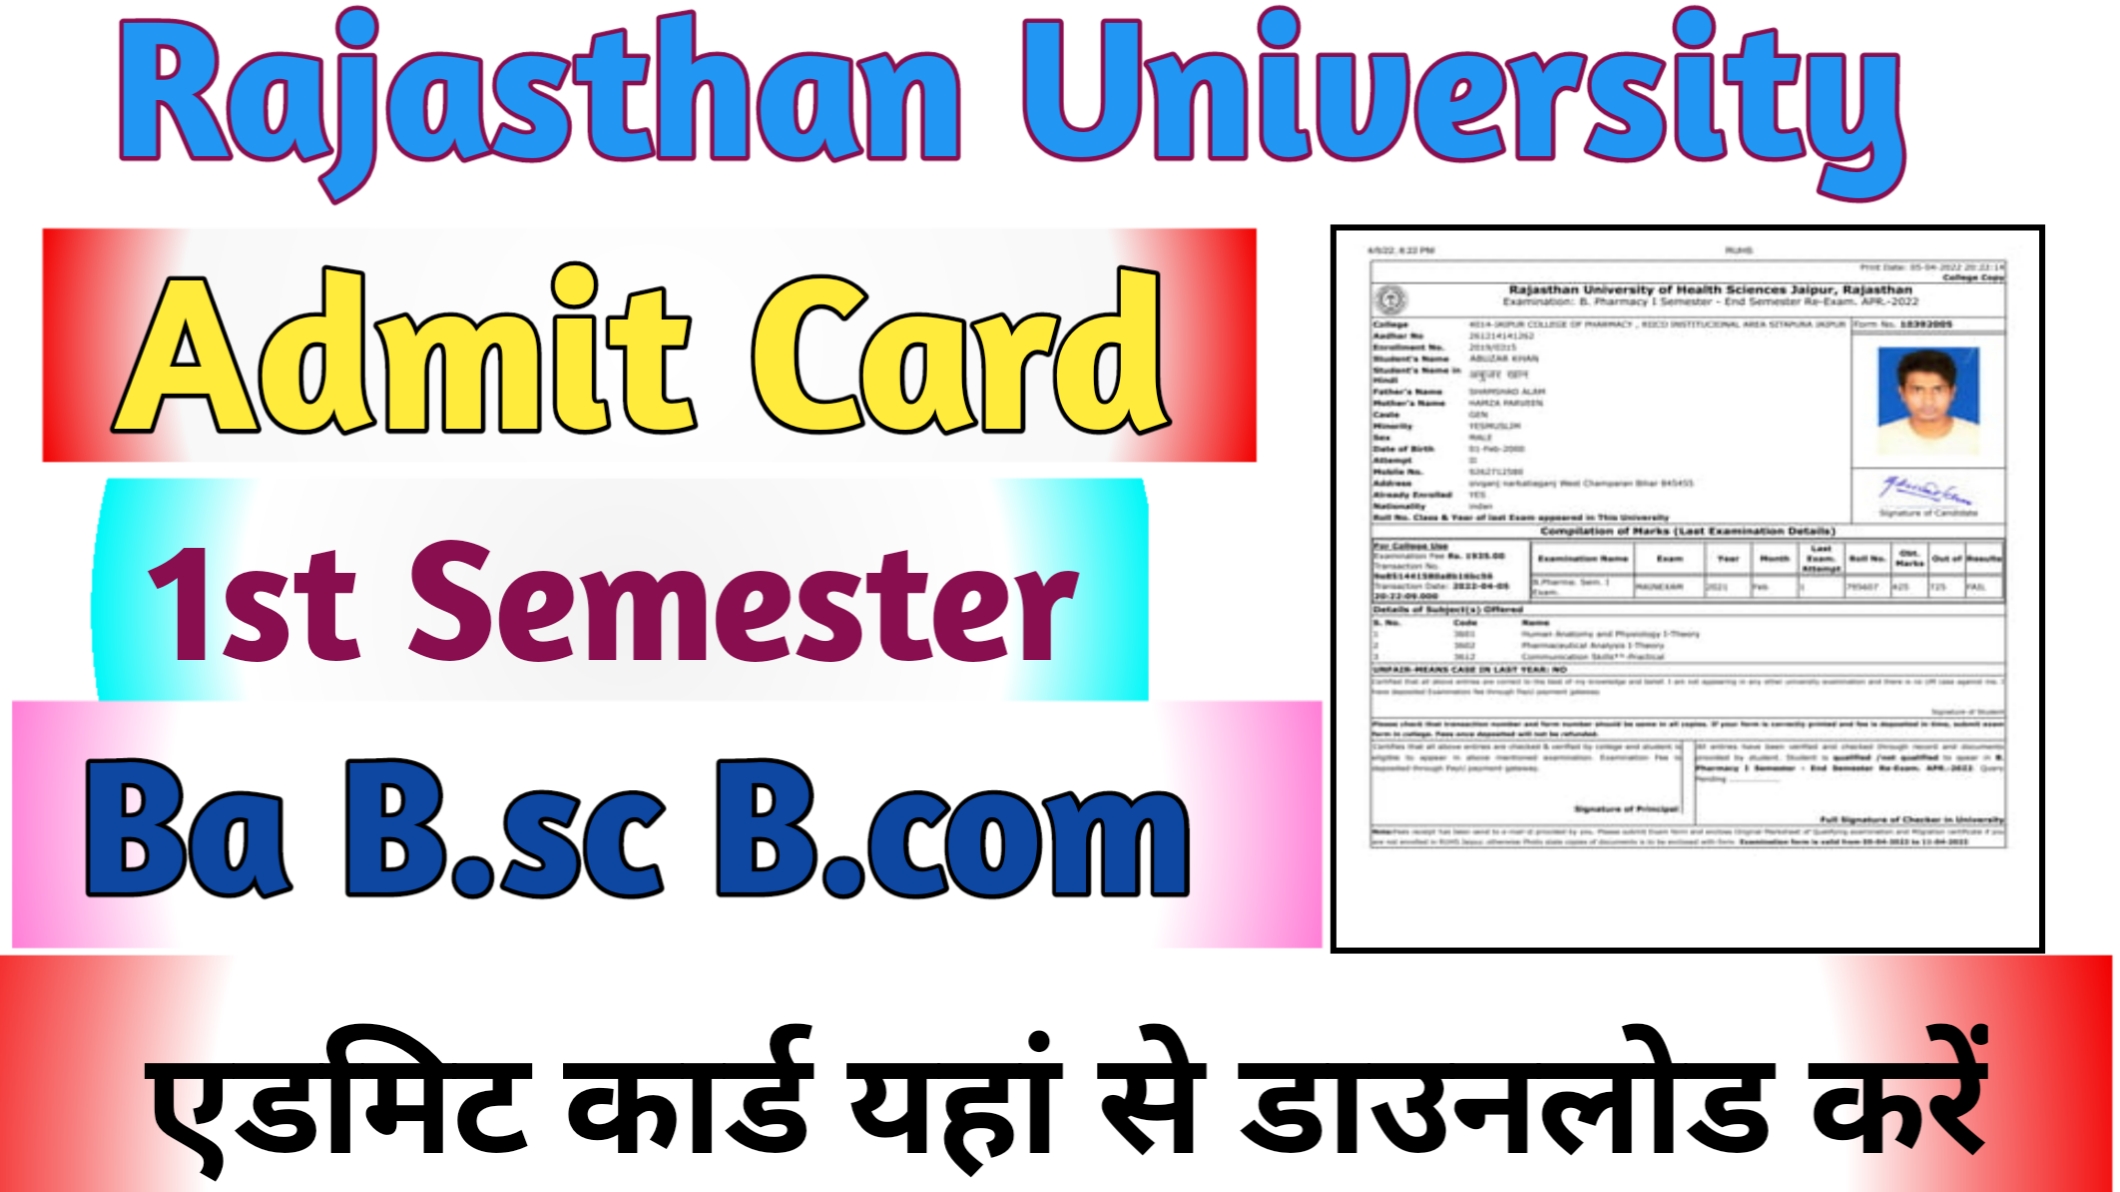 Rajasthan University Admit Card (1st Seermest)